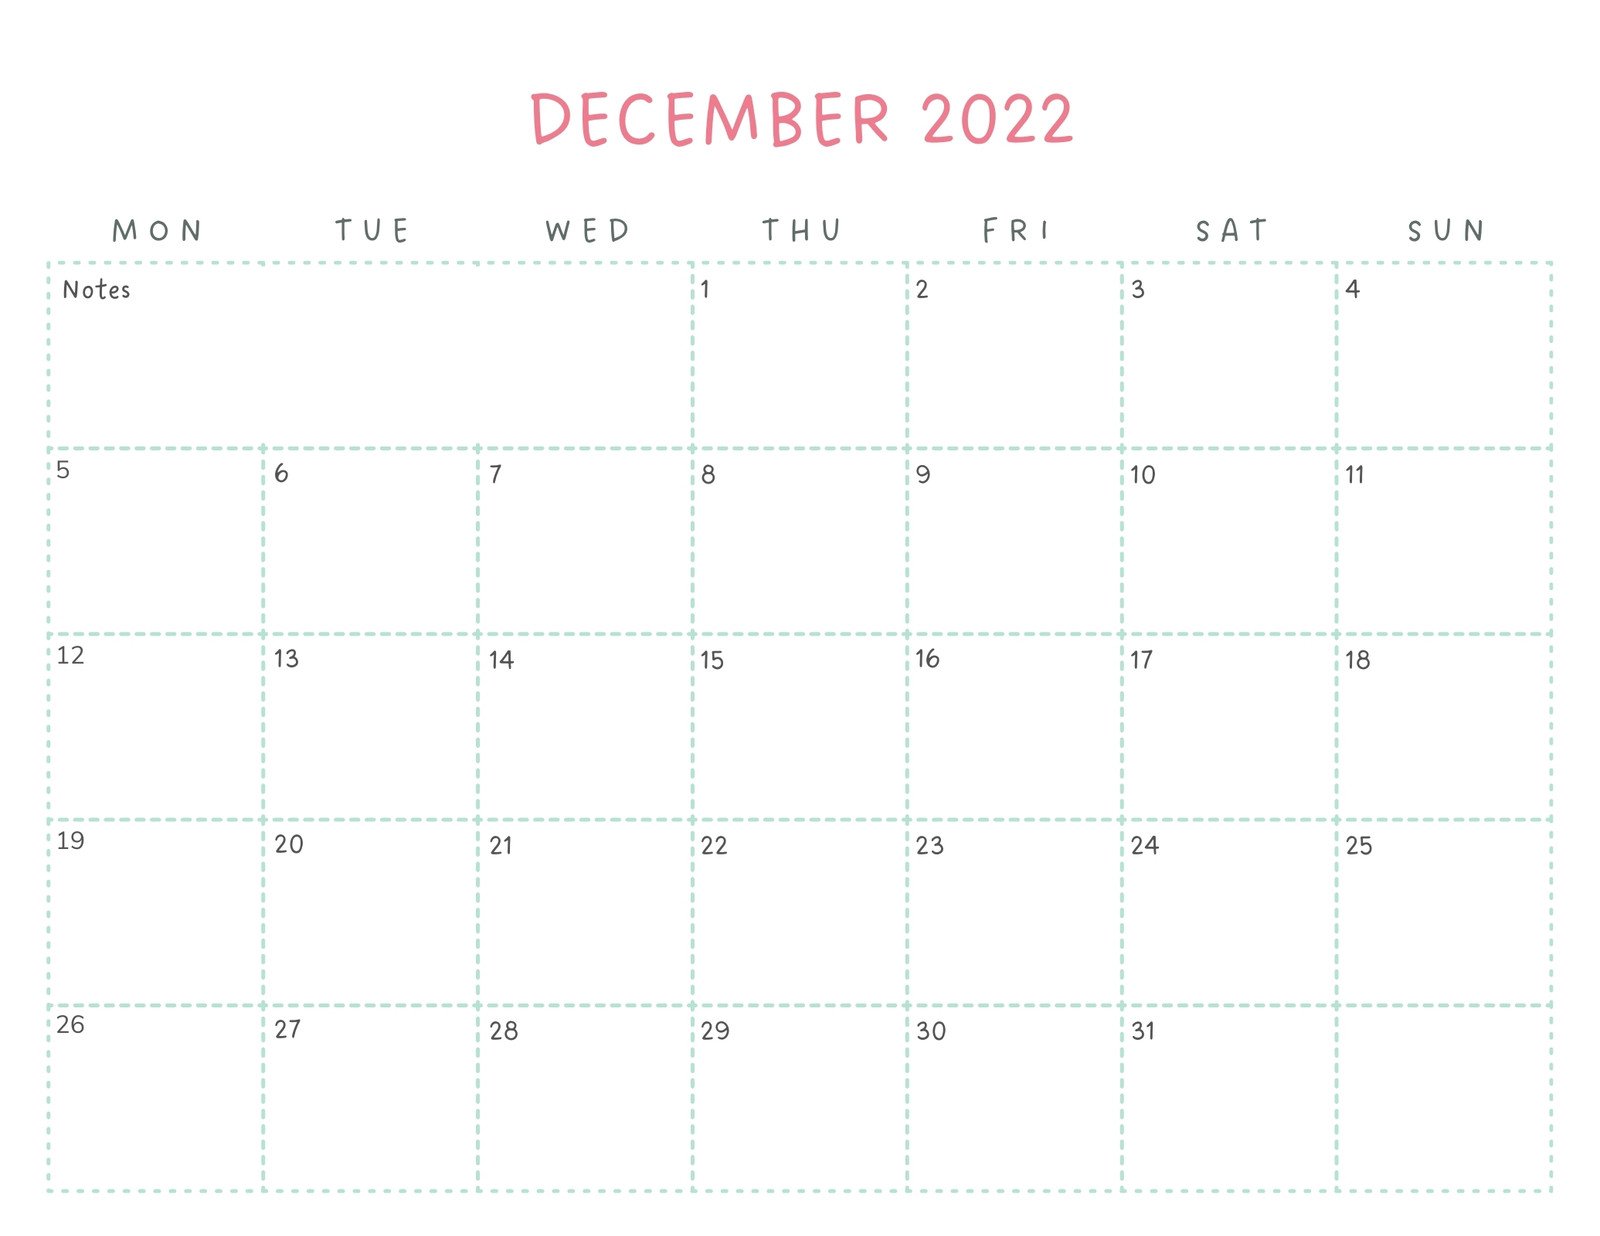 2022 Monthly Planner Calendar 17-Month Planner YOU CHOOSE Aug 2021-Dec 2022 